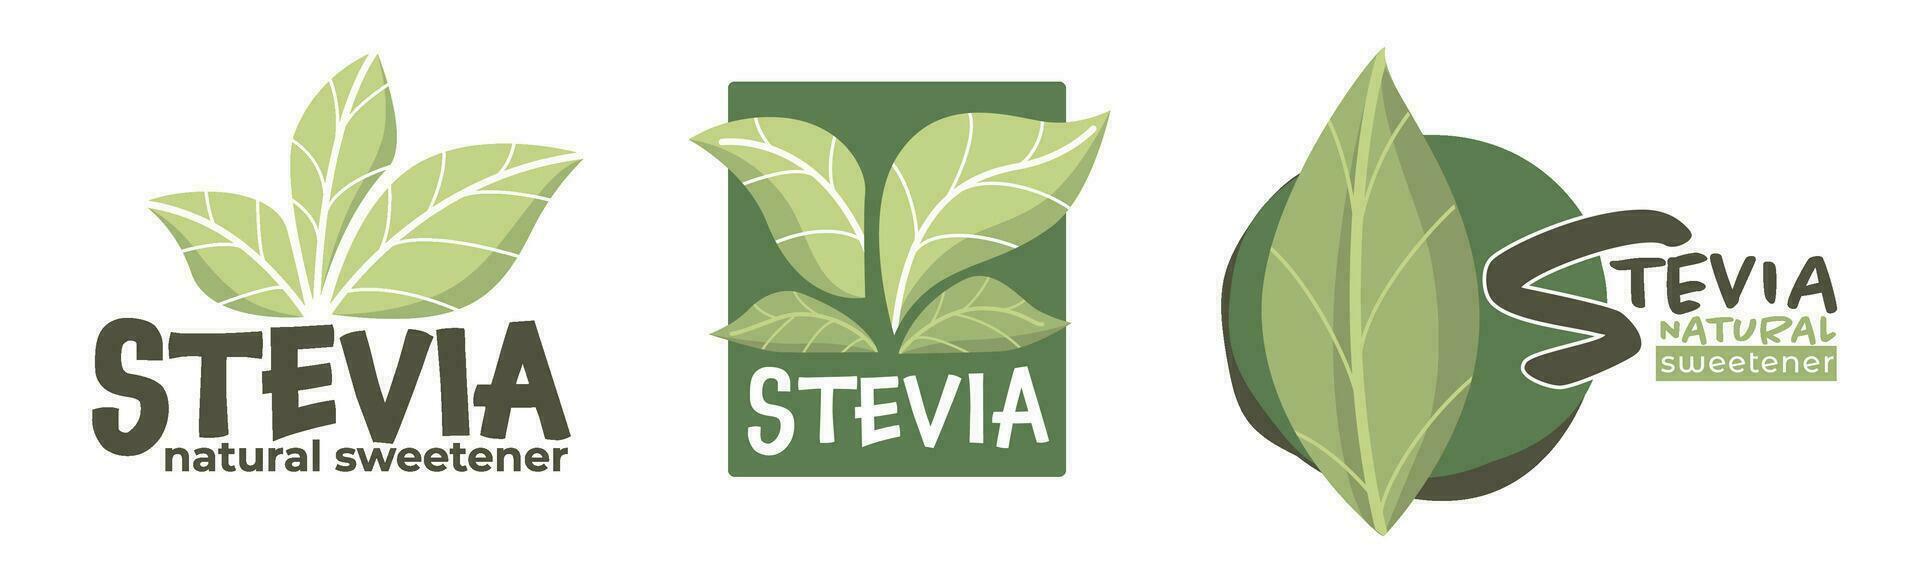 Natural sweetener alternative, stevia leaves eco vector